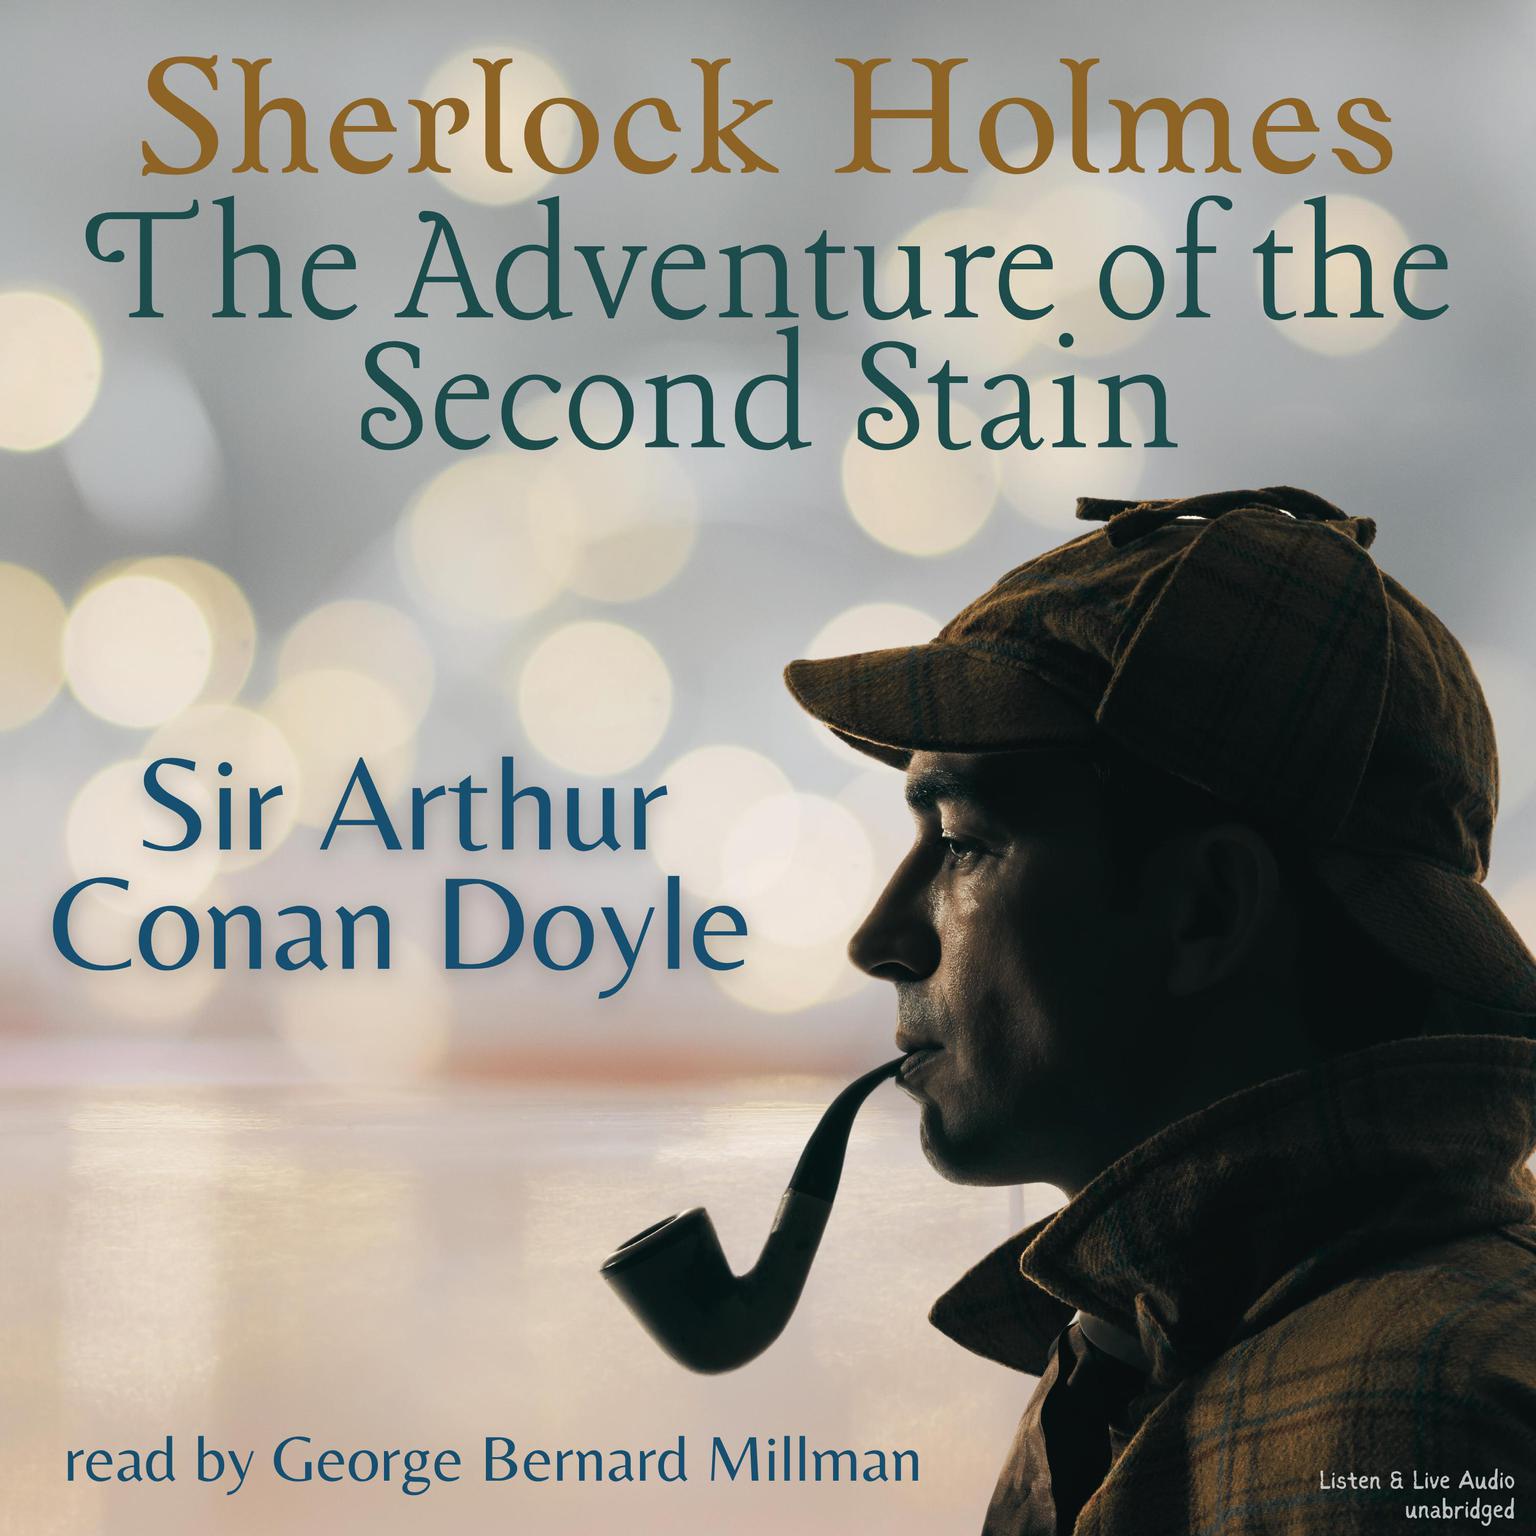 Sherlock Holmes: The Adventure of the Second Stain: The Adventure of the Second Stain Audiobook, by Arthur Conan Doyle